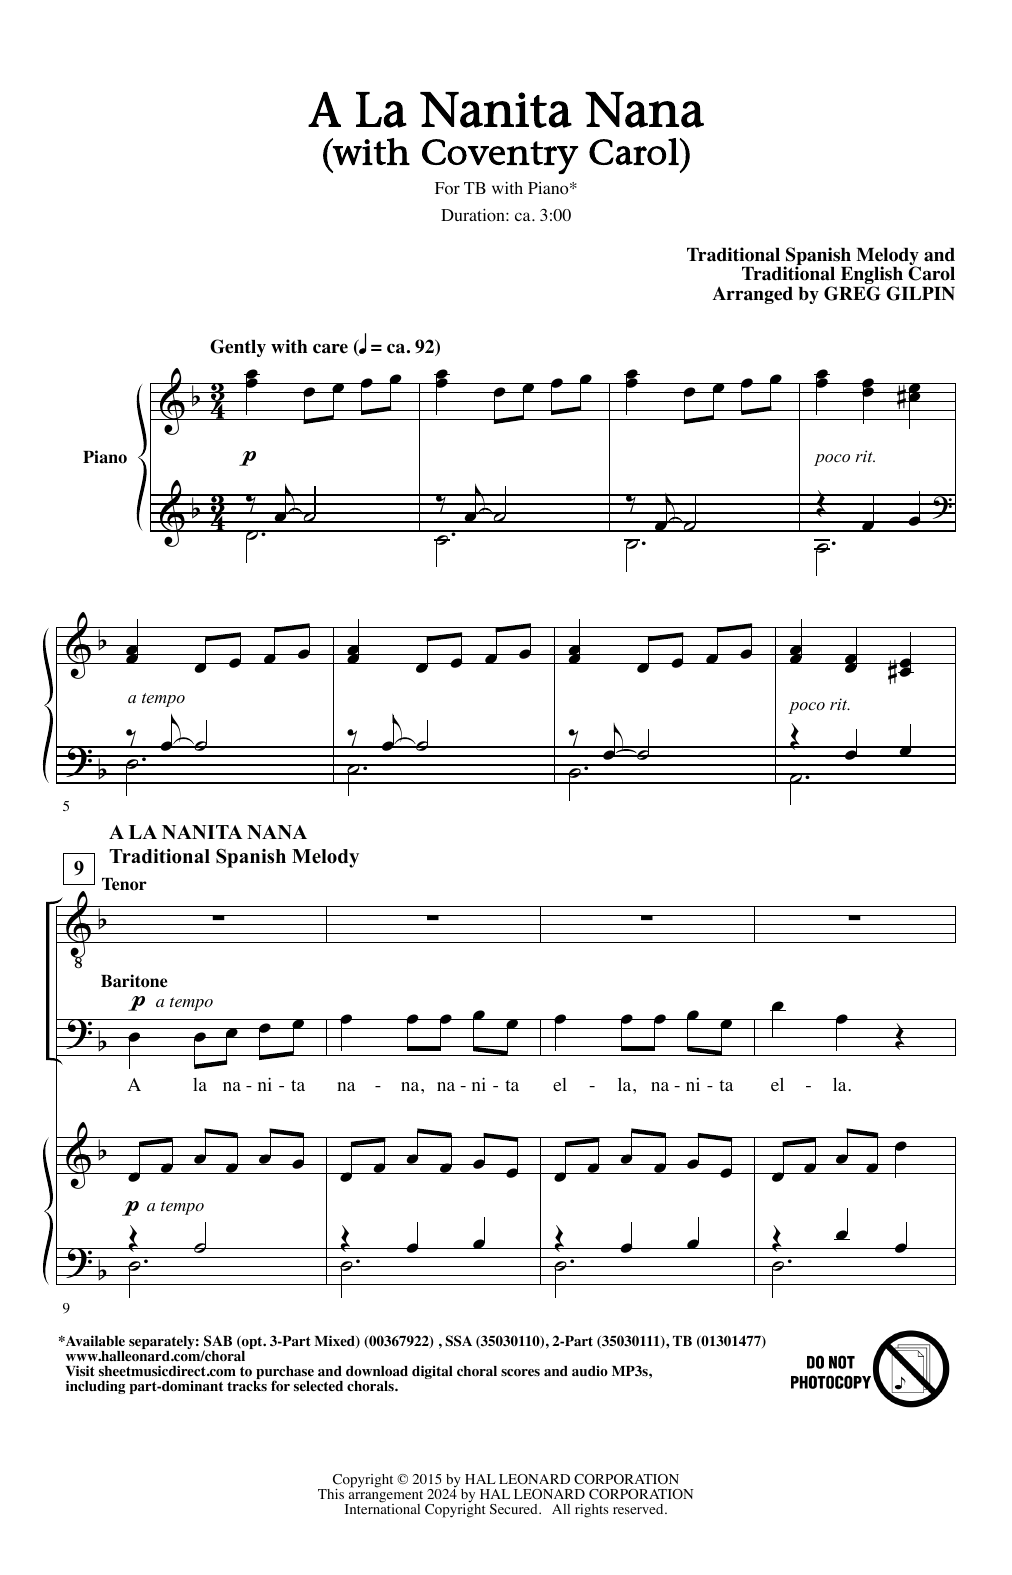 Greg Gilpin A La Nanita Nana (with Coventry Carol) sheet music notes printable PDF score